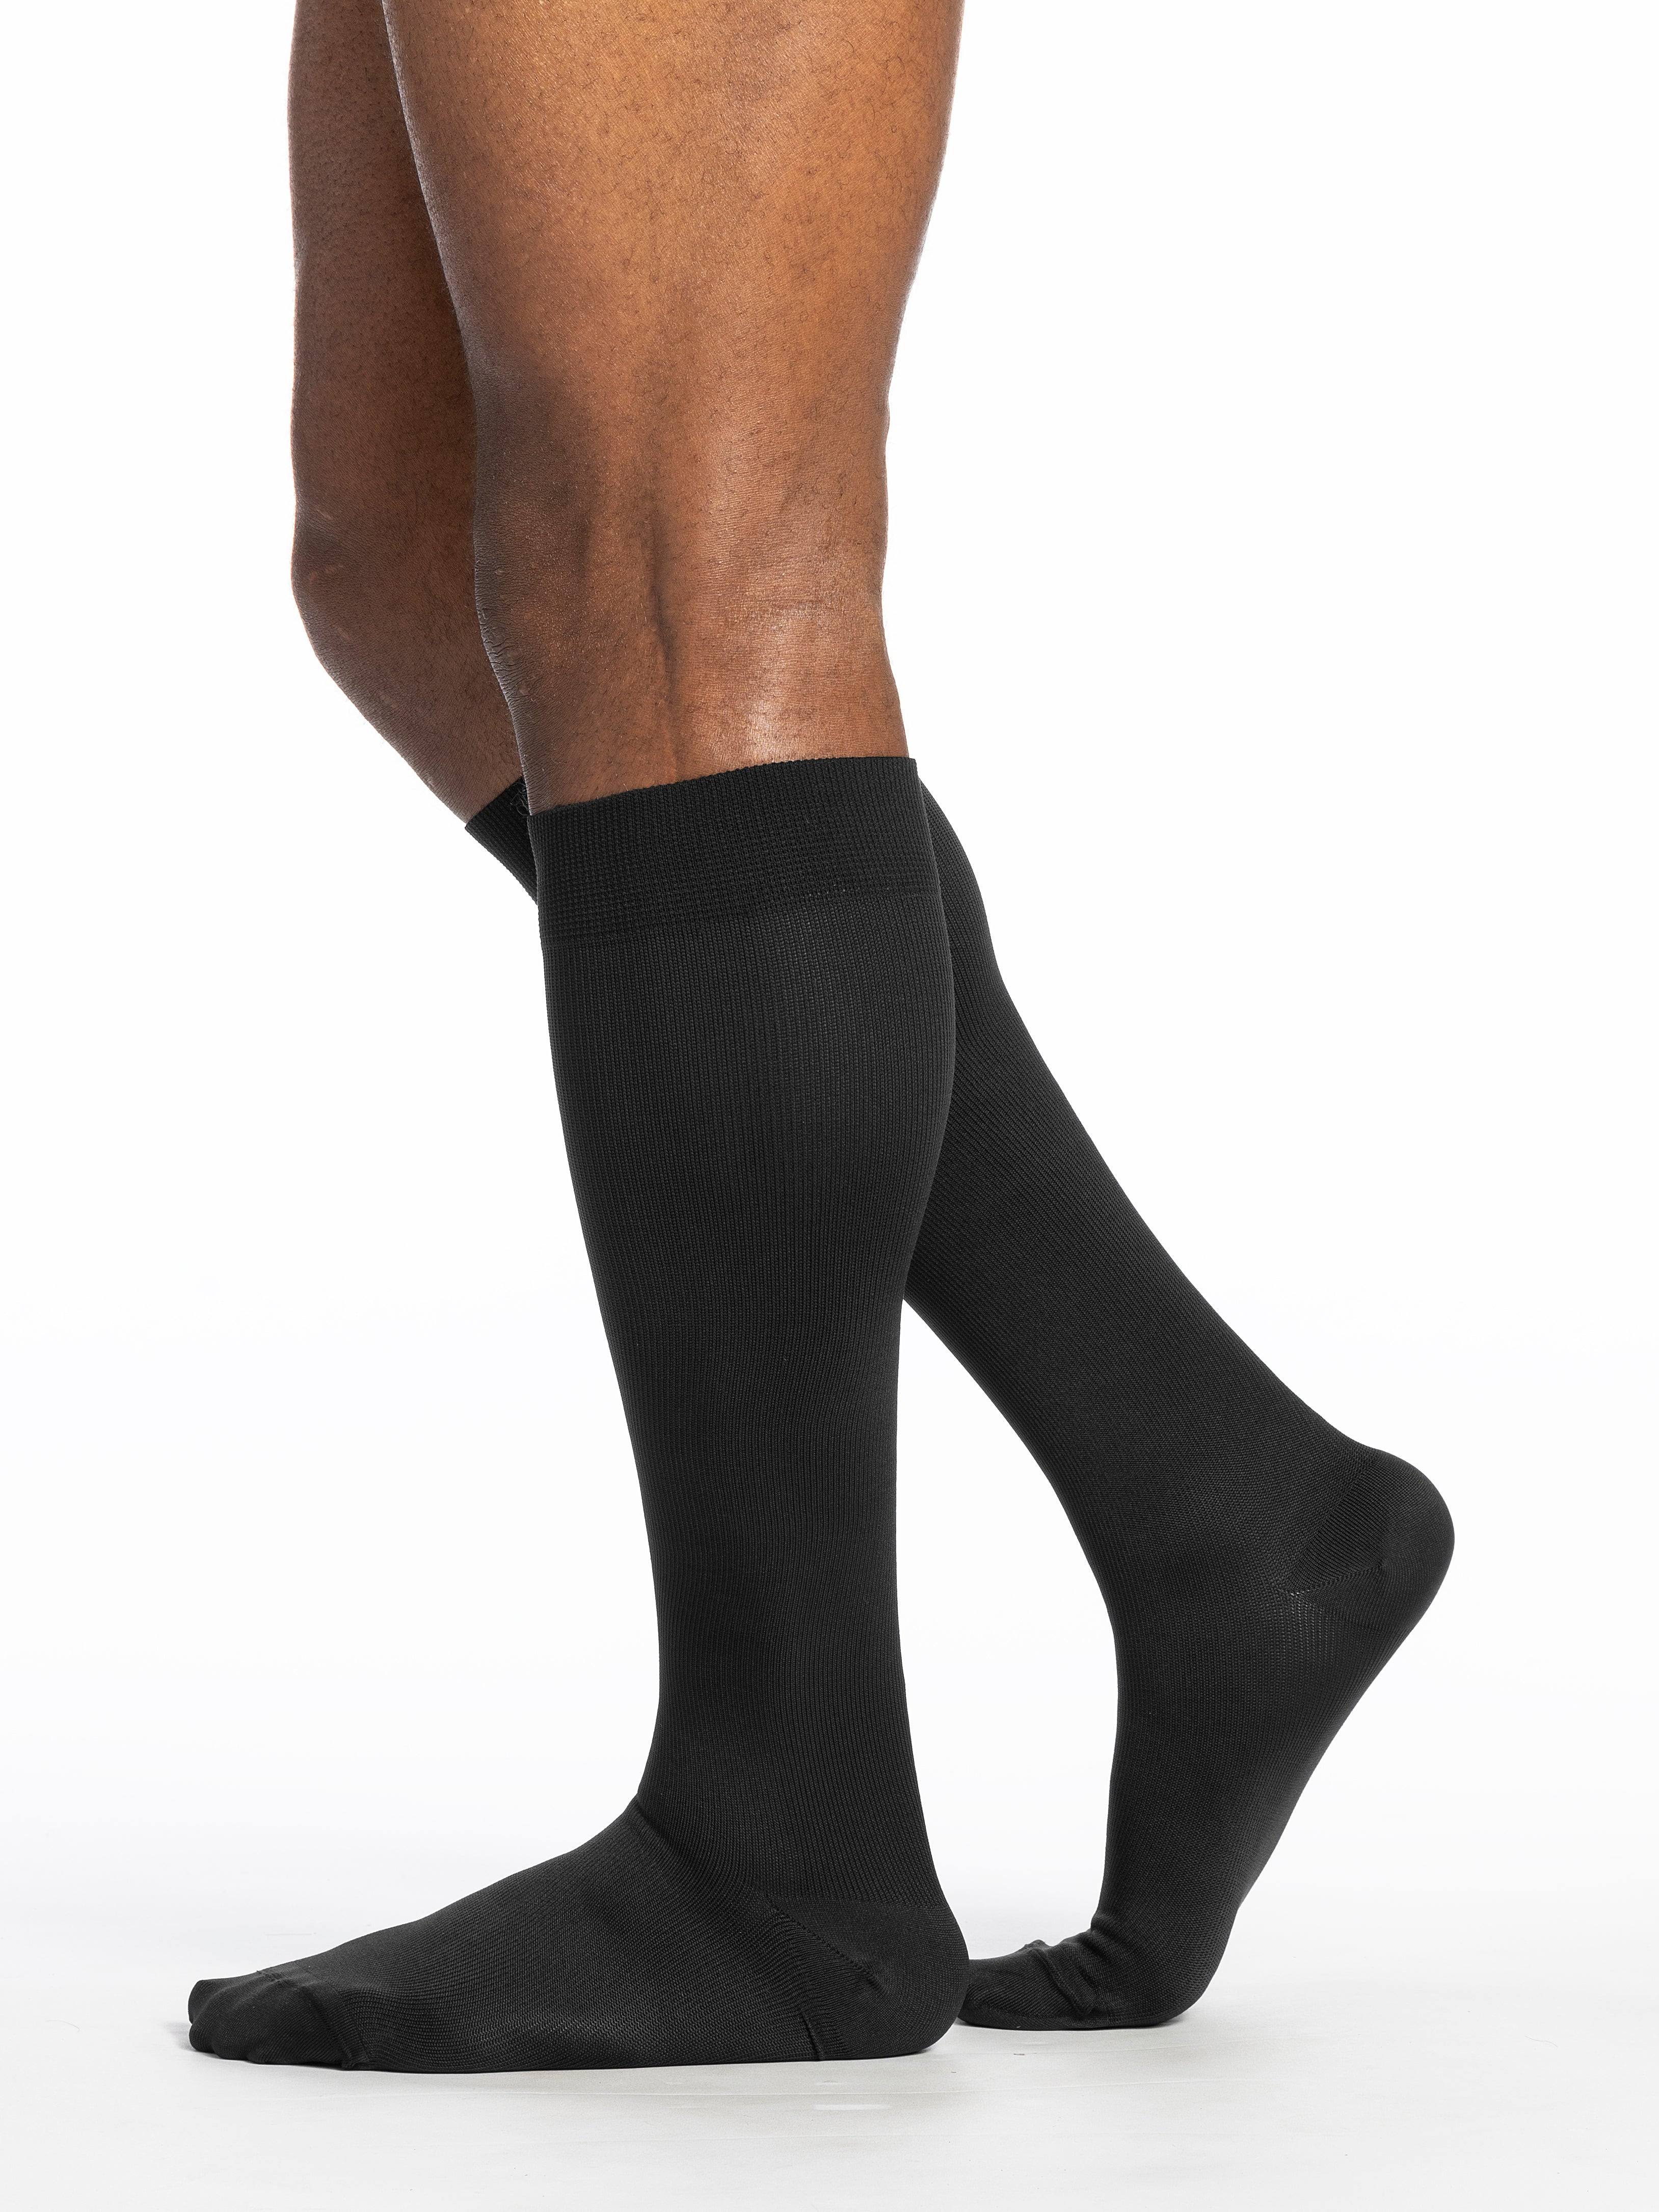 SIGVARIS Midtown Microfiber Knee High Compression Men's Socks - Black, 20-30mmhg, Medium-Large